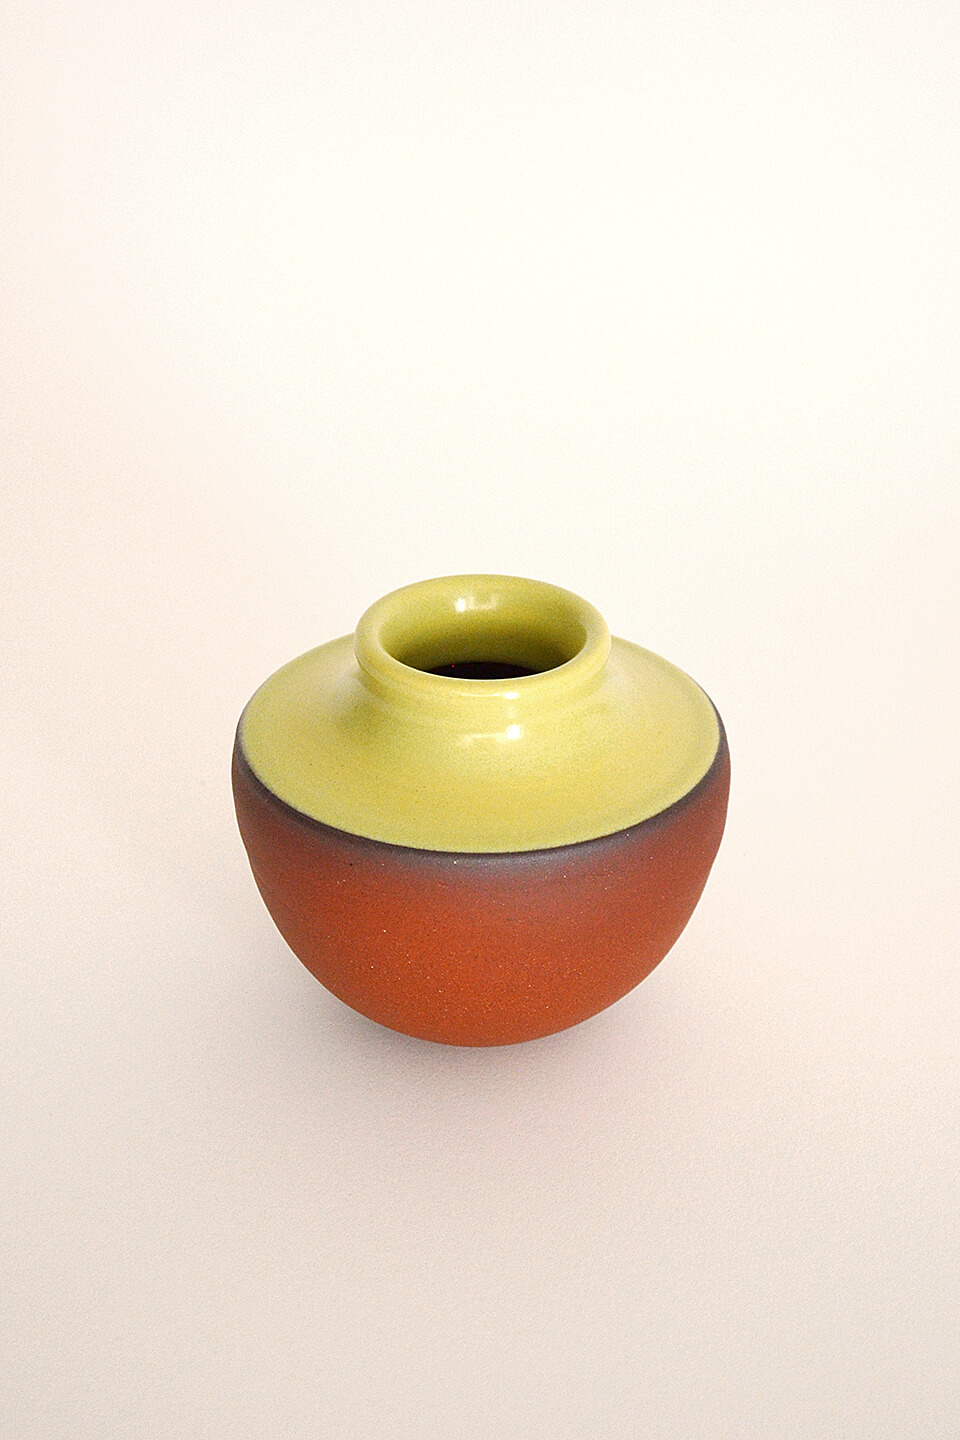 Satin Yellow Green Ceramic Vase No. 647